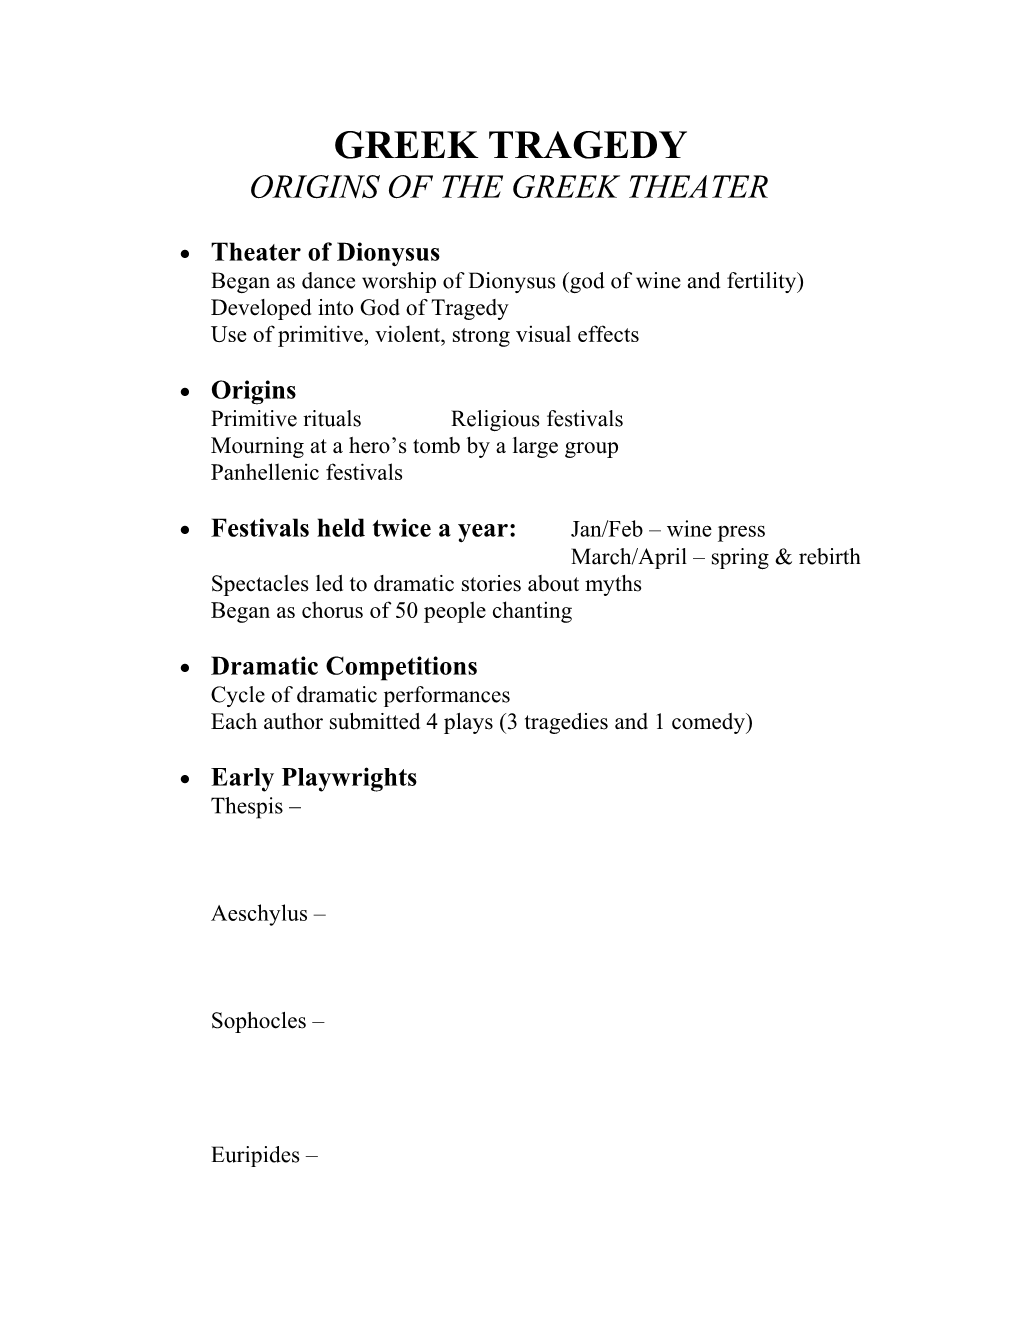 Origins of the Greek Theater